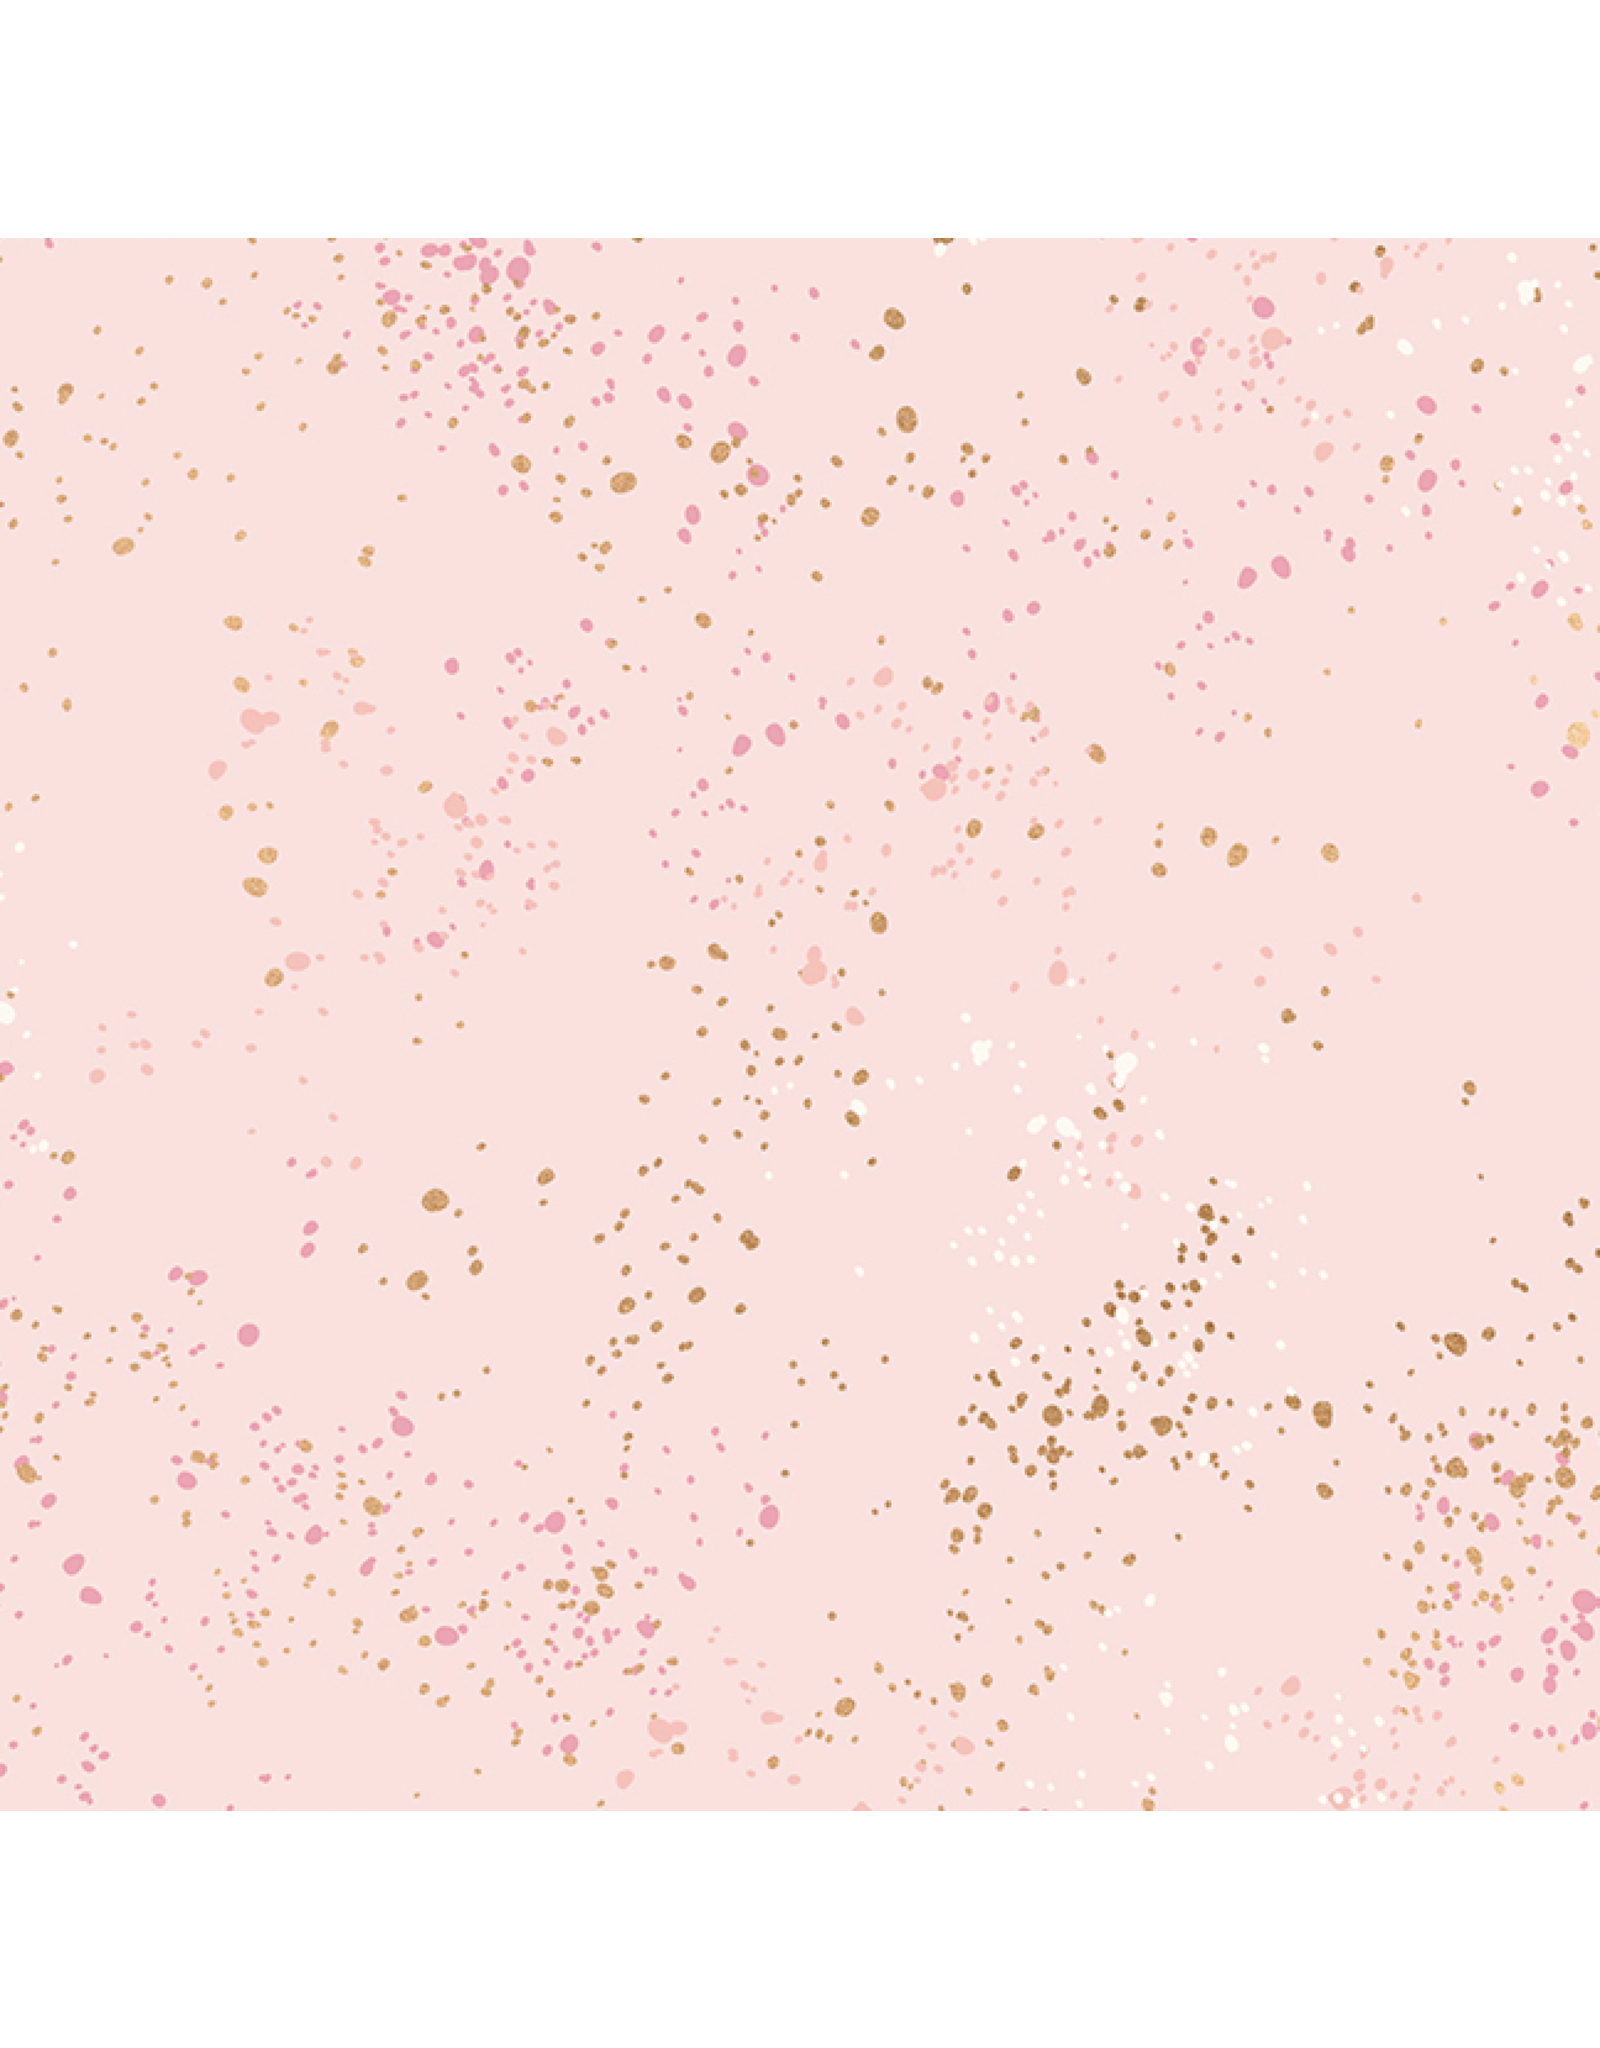 Rashida Coleman-Hale Speckled New in Pale Pink, Fabric Half-Yards